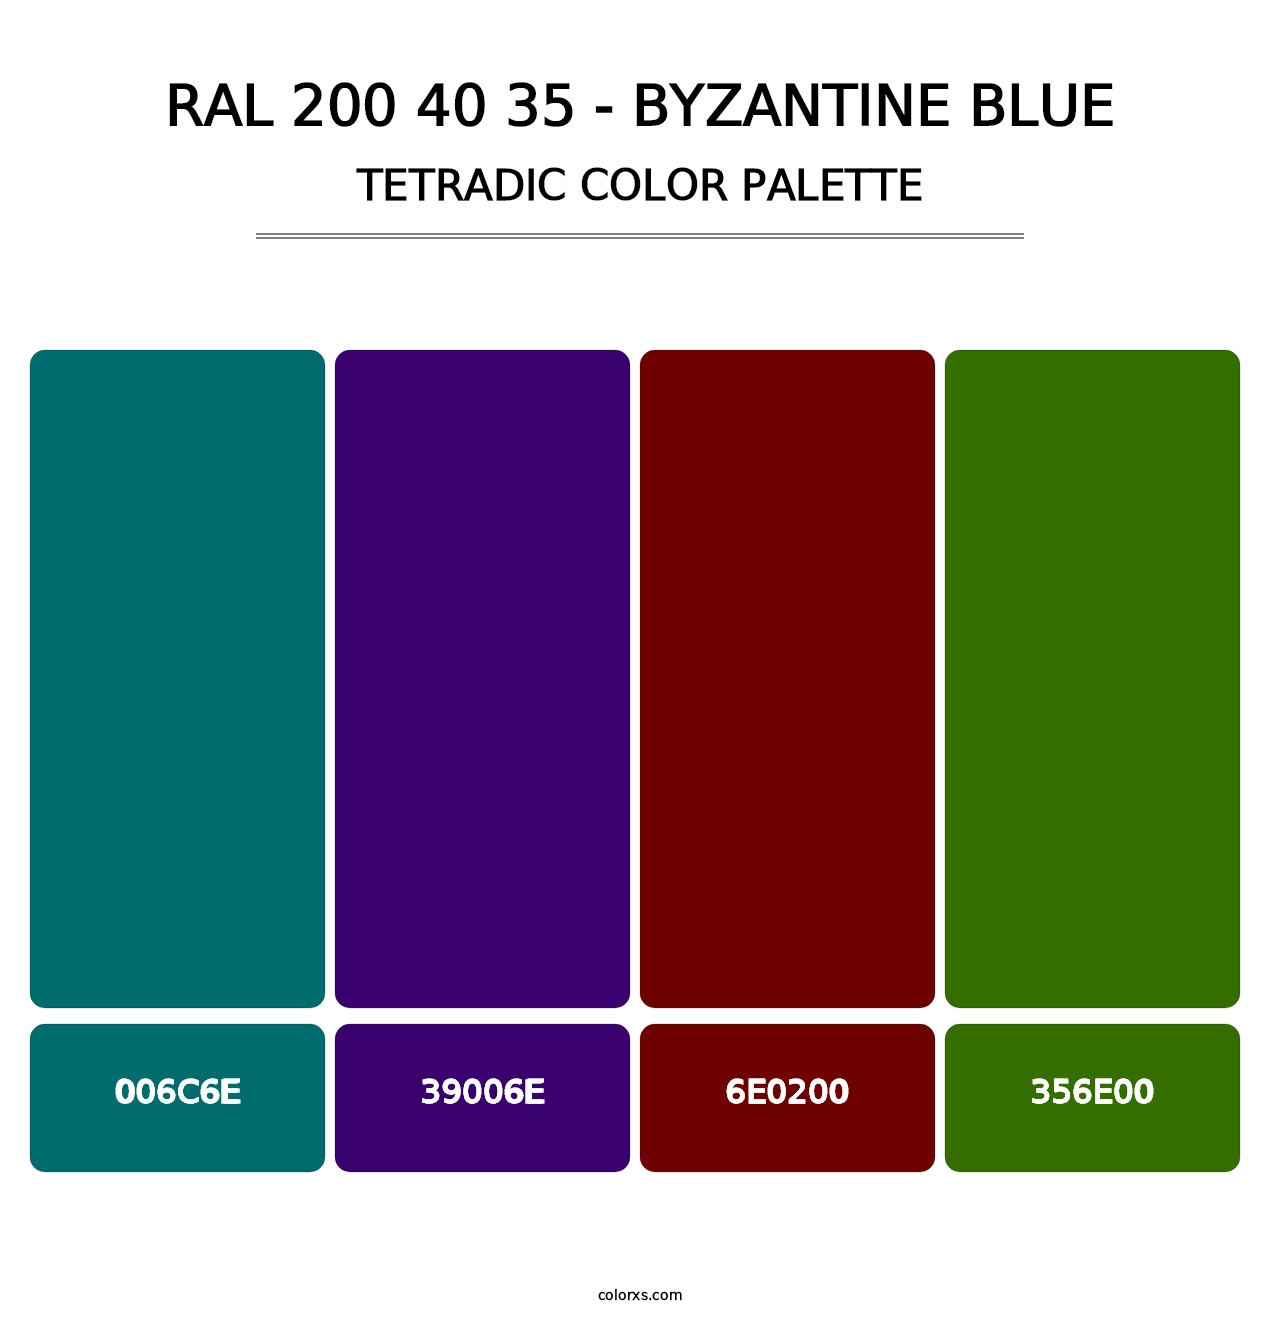 RAL 200 40 35 - Byzantine Blue - Tetradic Color Palette